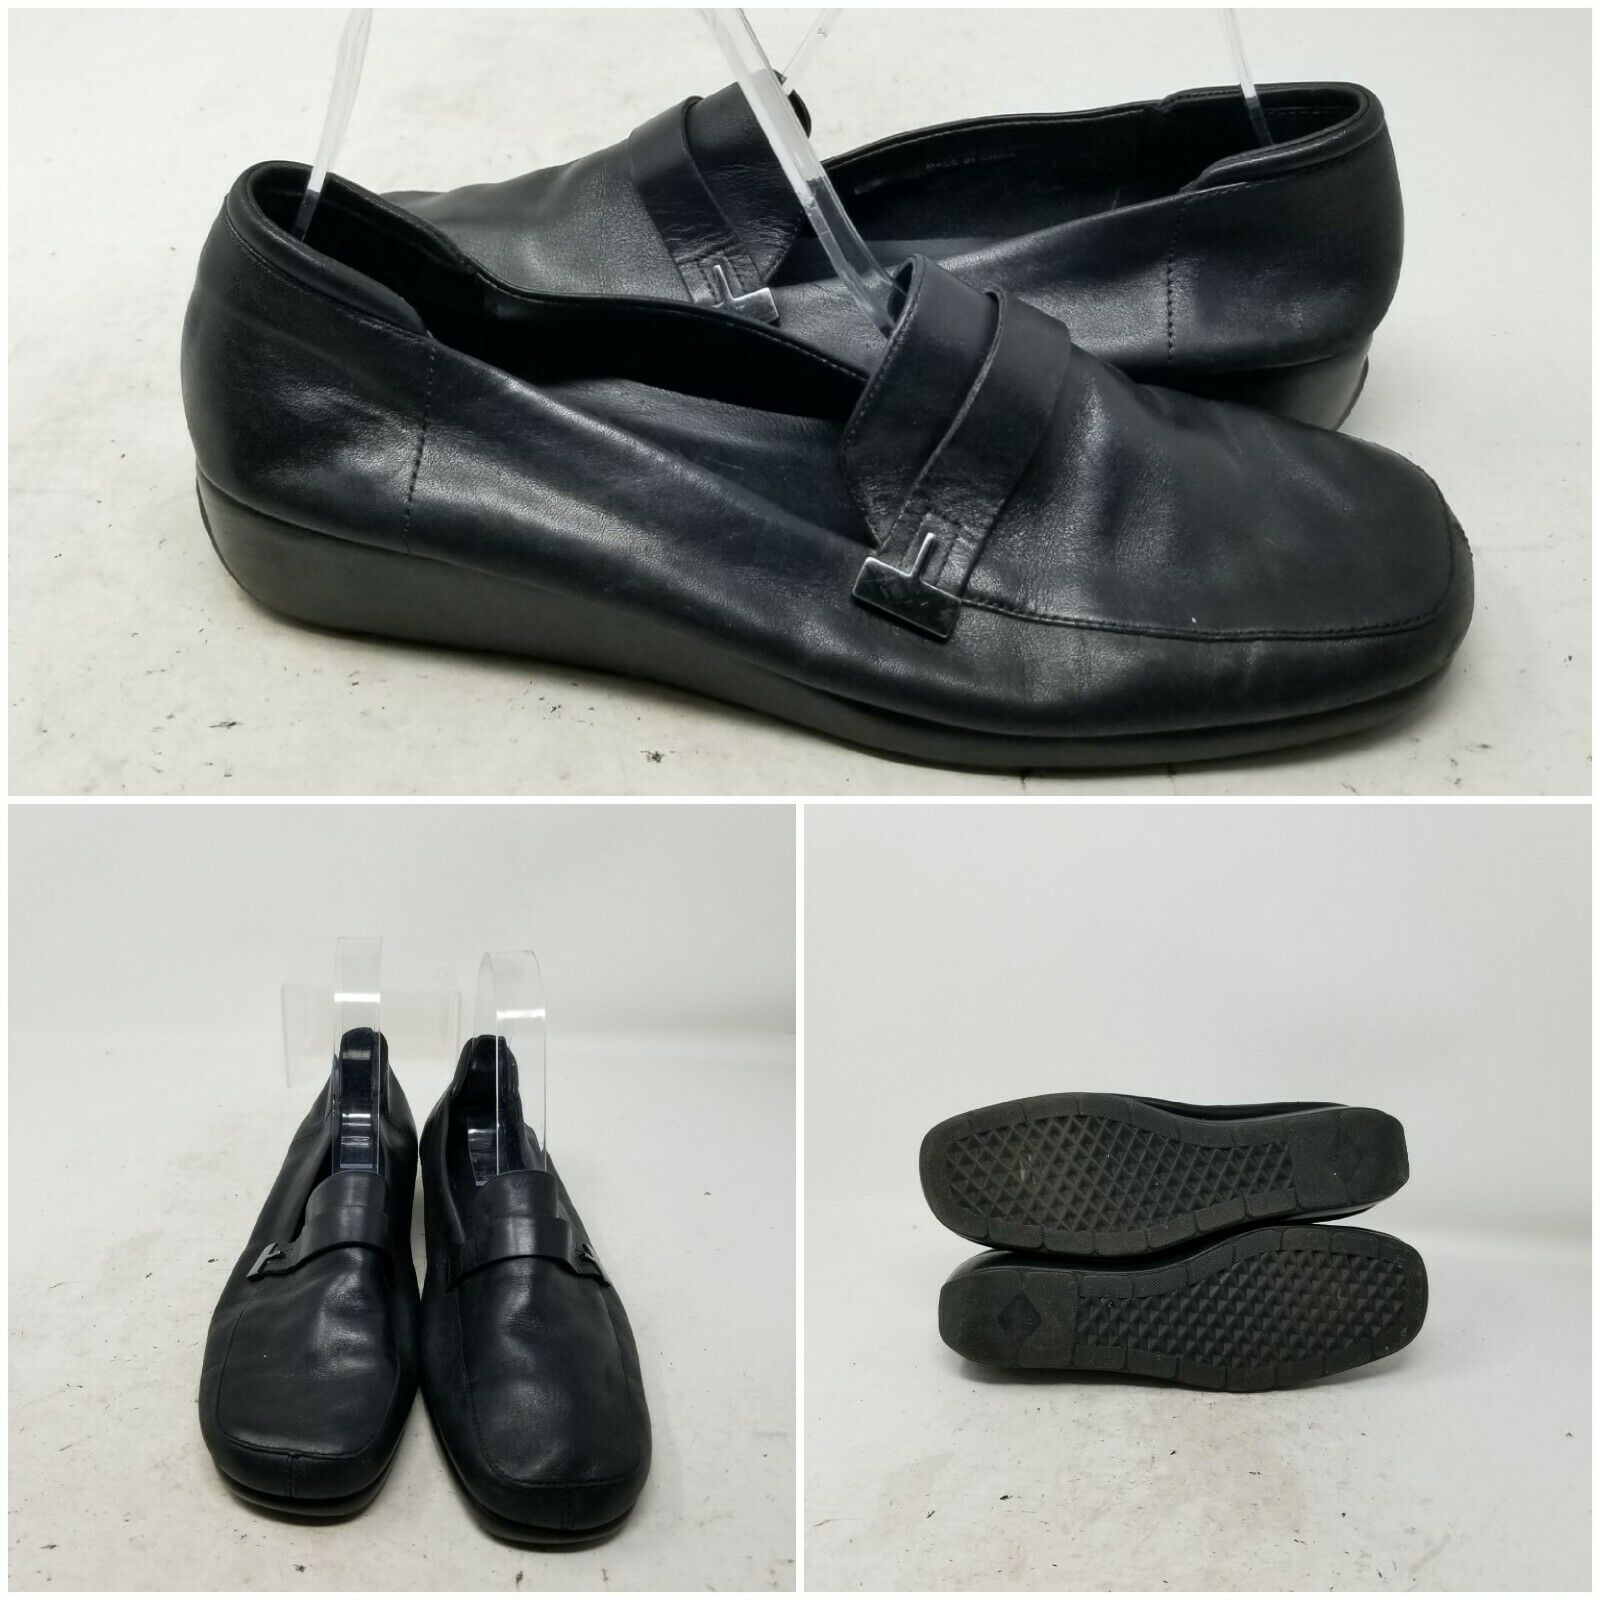 Aerosoles Black Leather Casual Walking Flat Loafers Shoes Women's Size 9